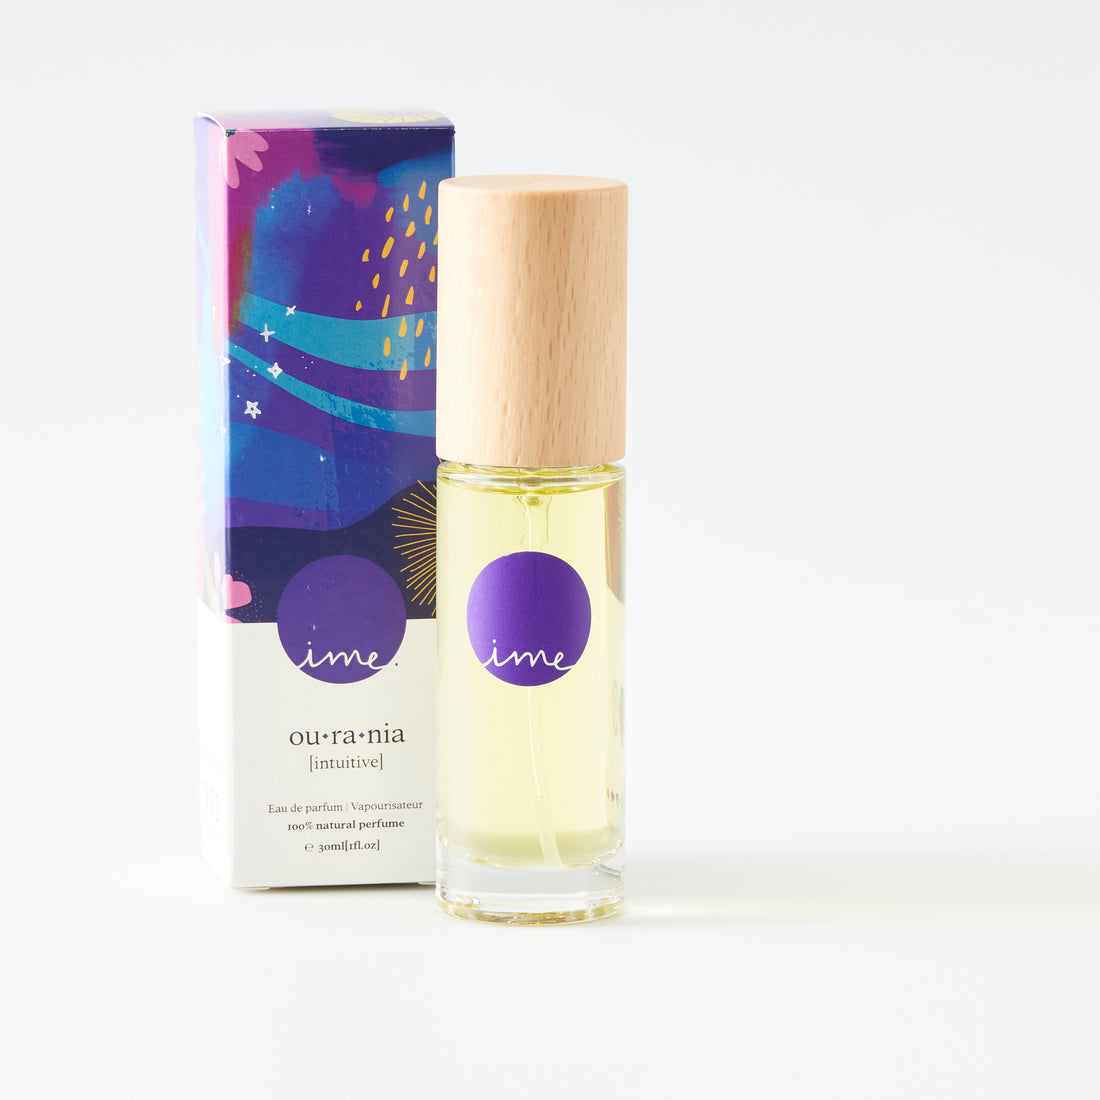 IME Ourania [Intuitive] natural perfume